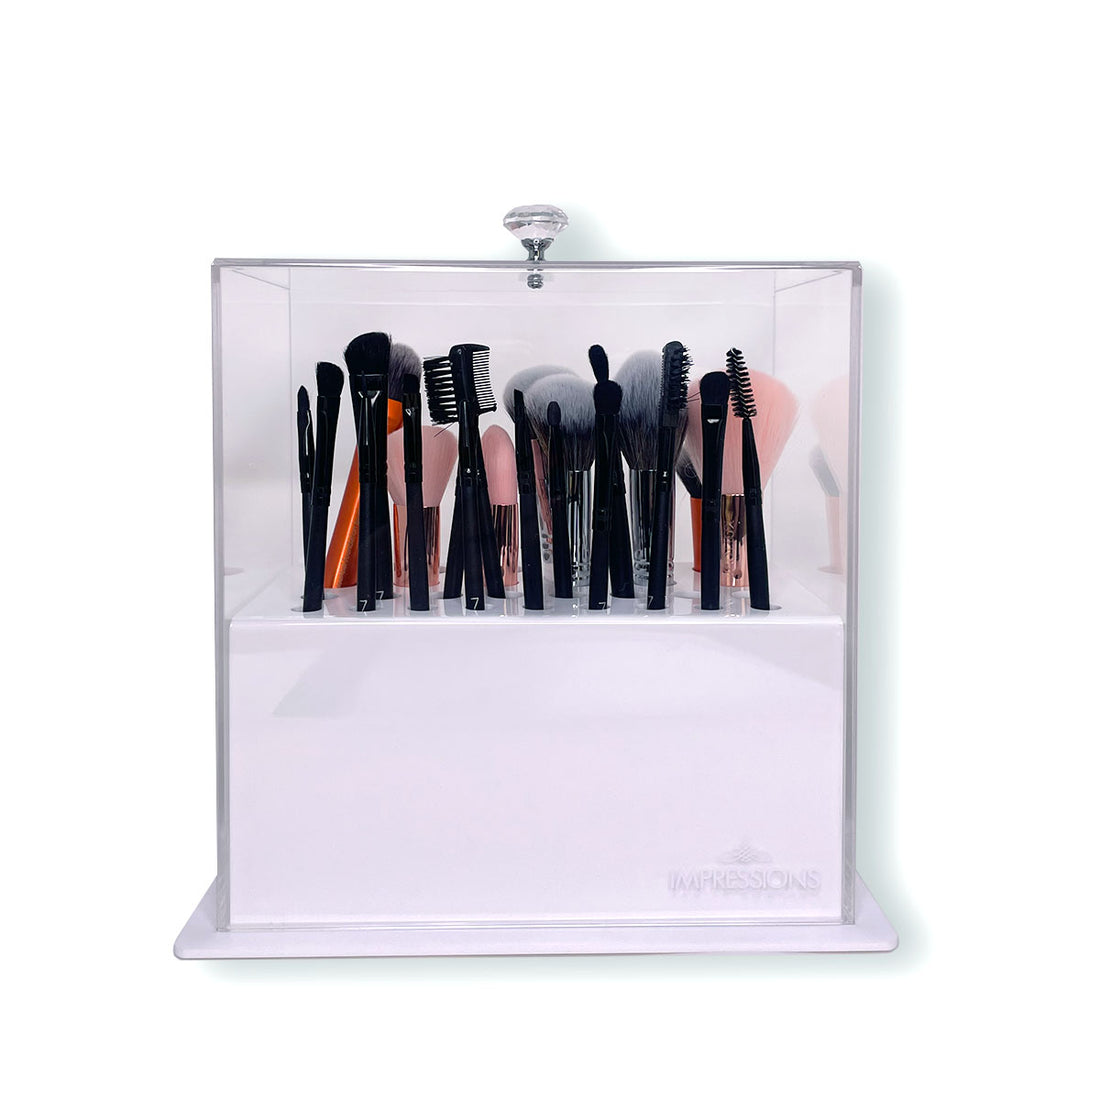 Diamond Collection Acrylic Makeup Brush Holder • Impressions